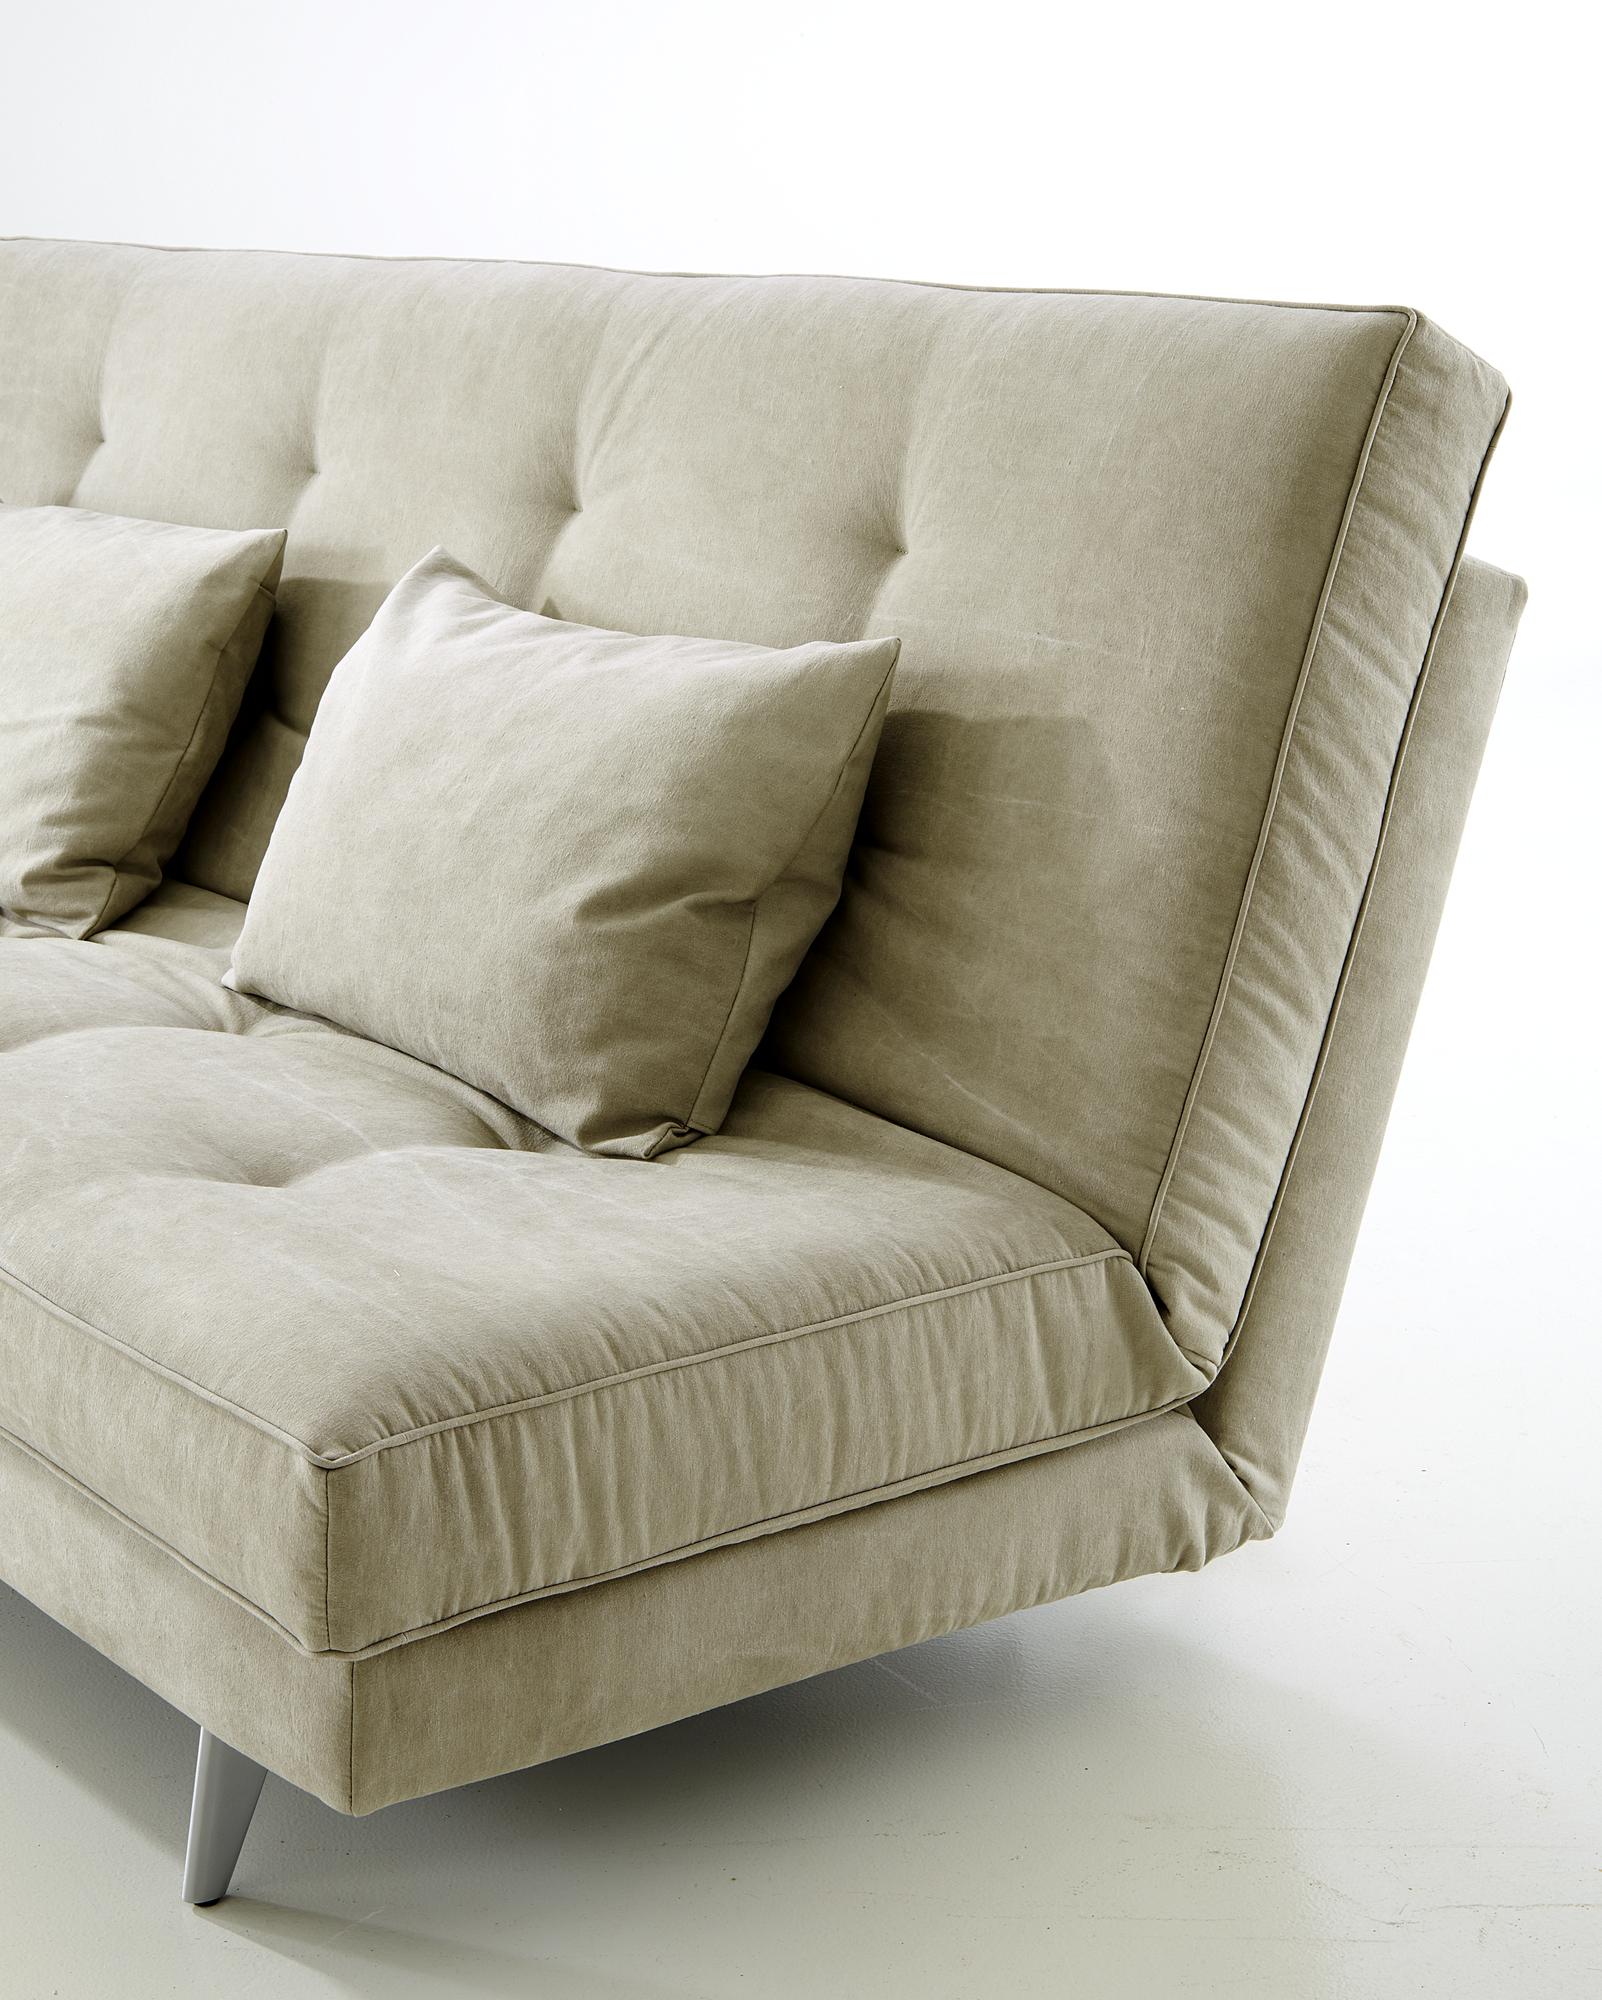 PANAMA cotton clic-clac sofa bed cover light grey 